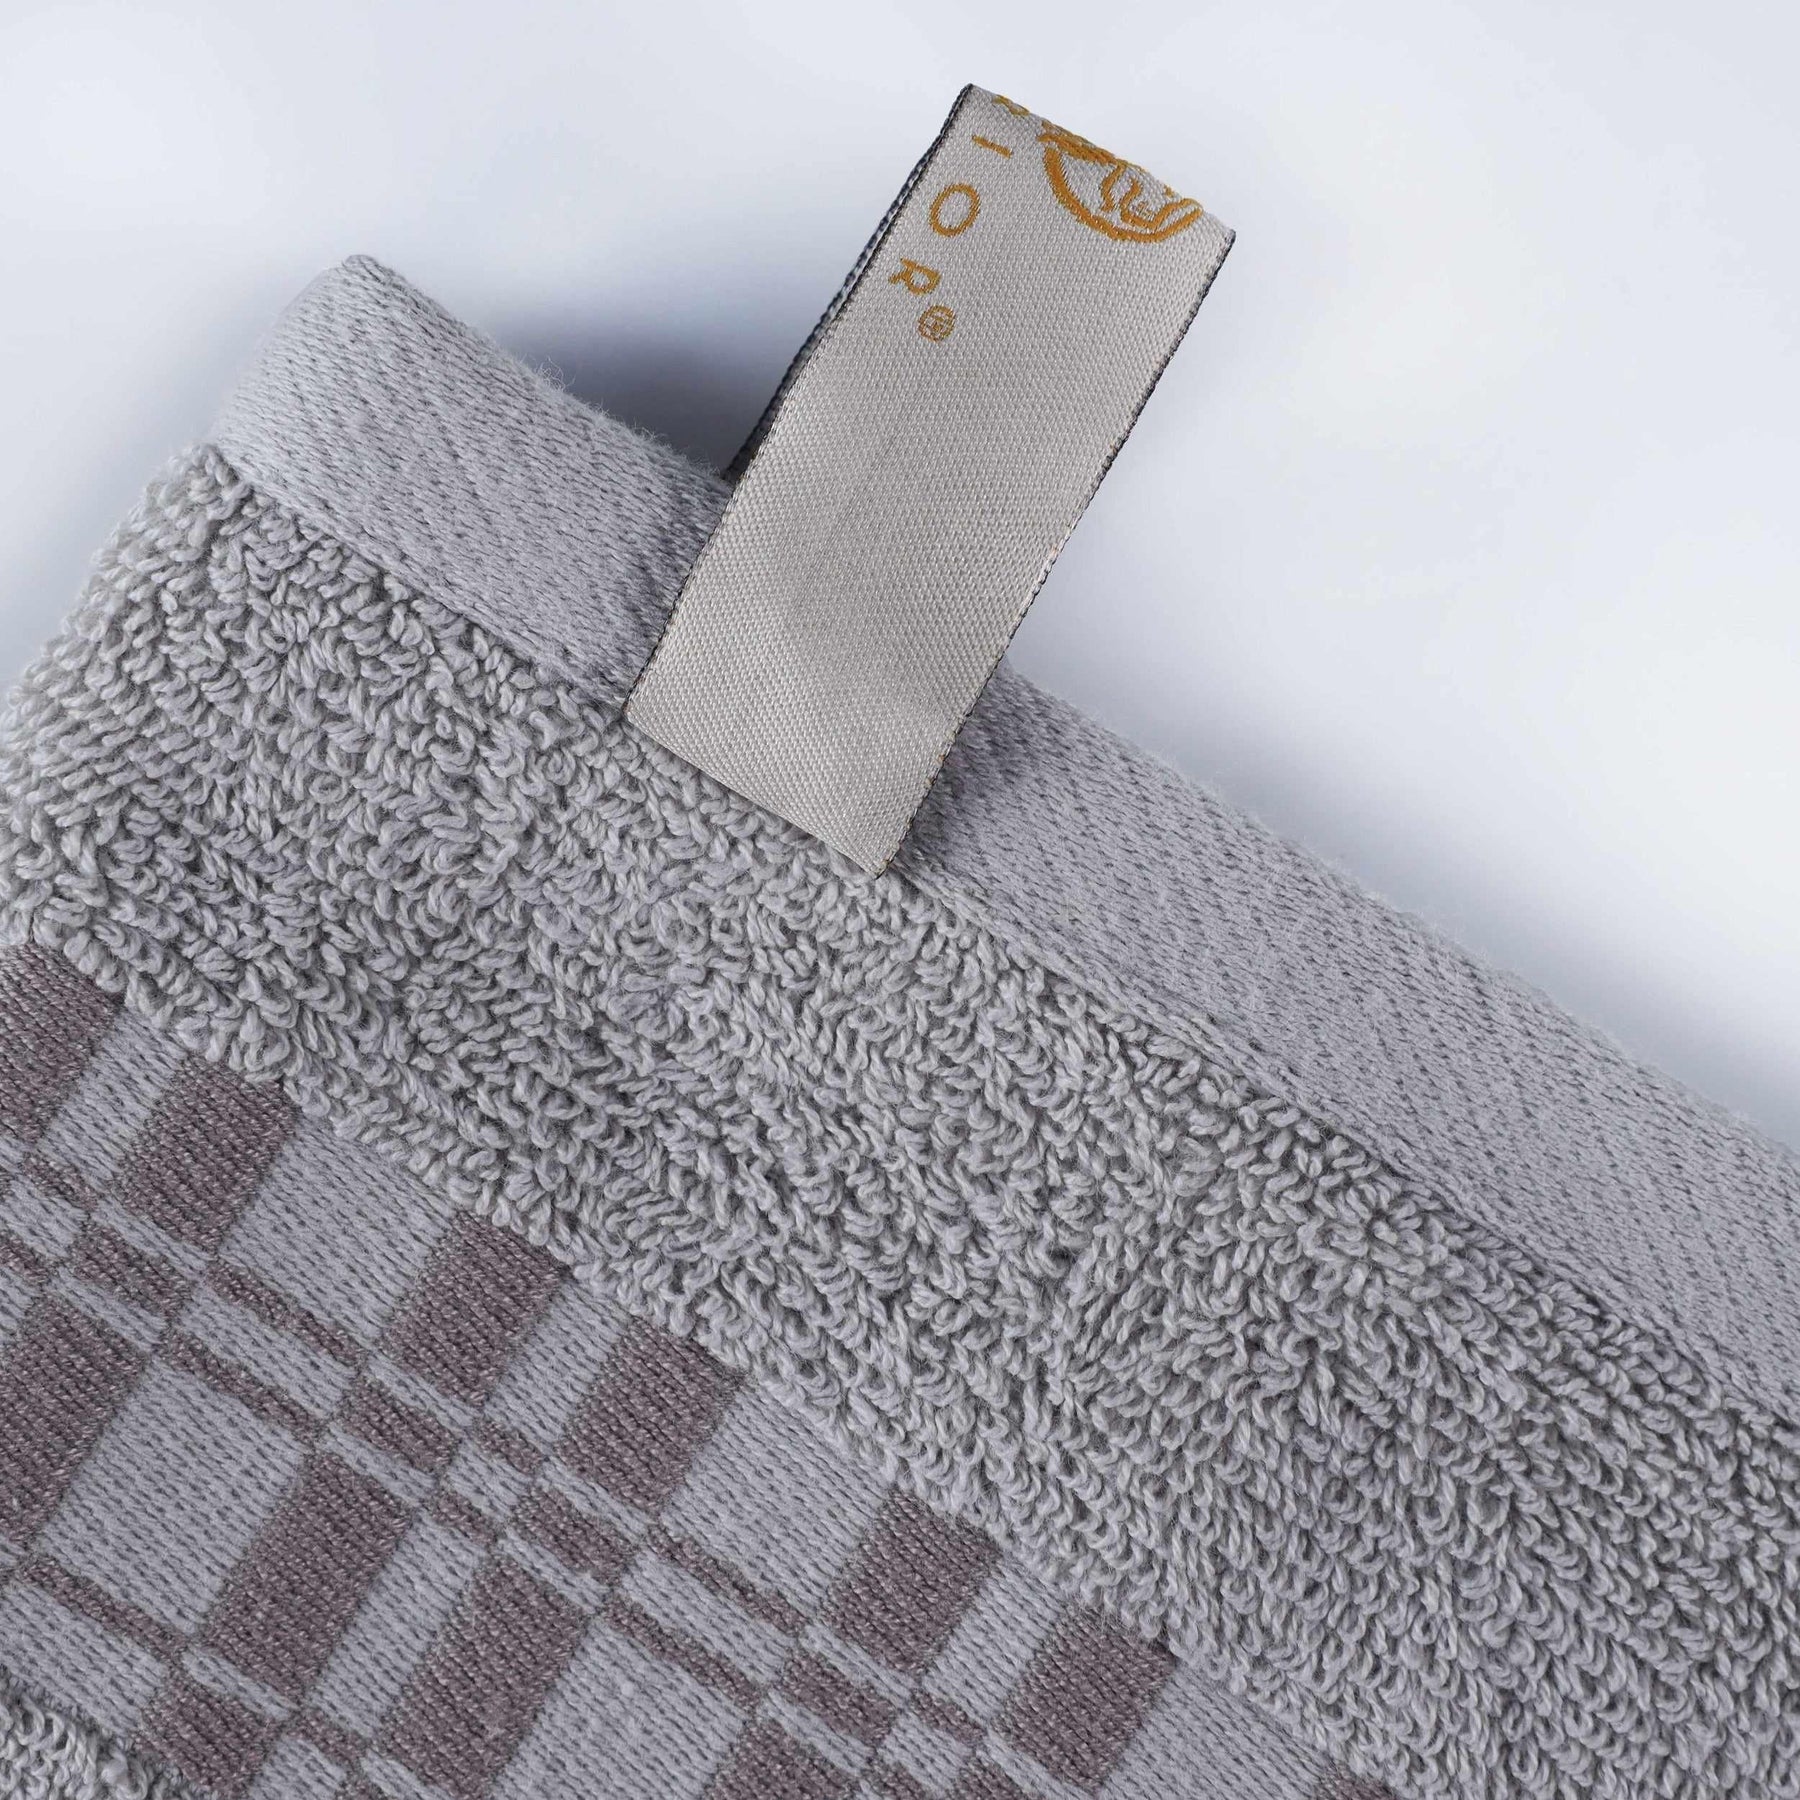  Superior Larissa Cotton 4-Piece Bath Towel Set with Geometric Embroidered Jacquard Border - Chrome